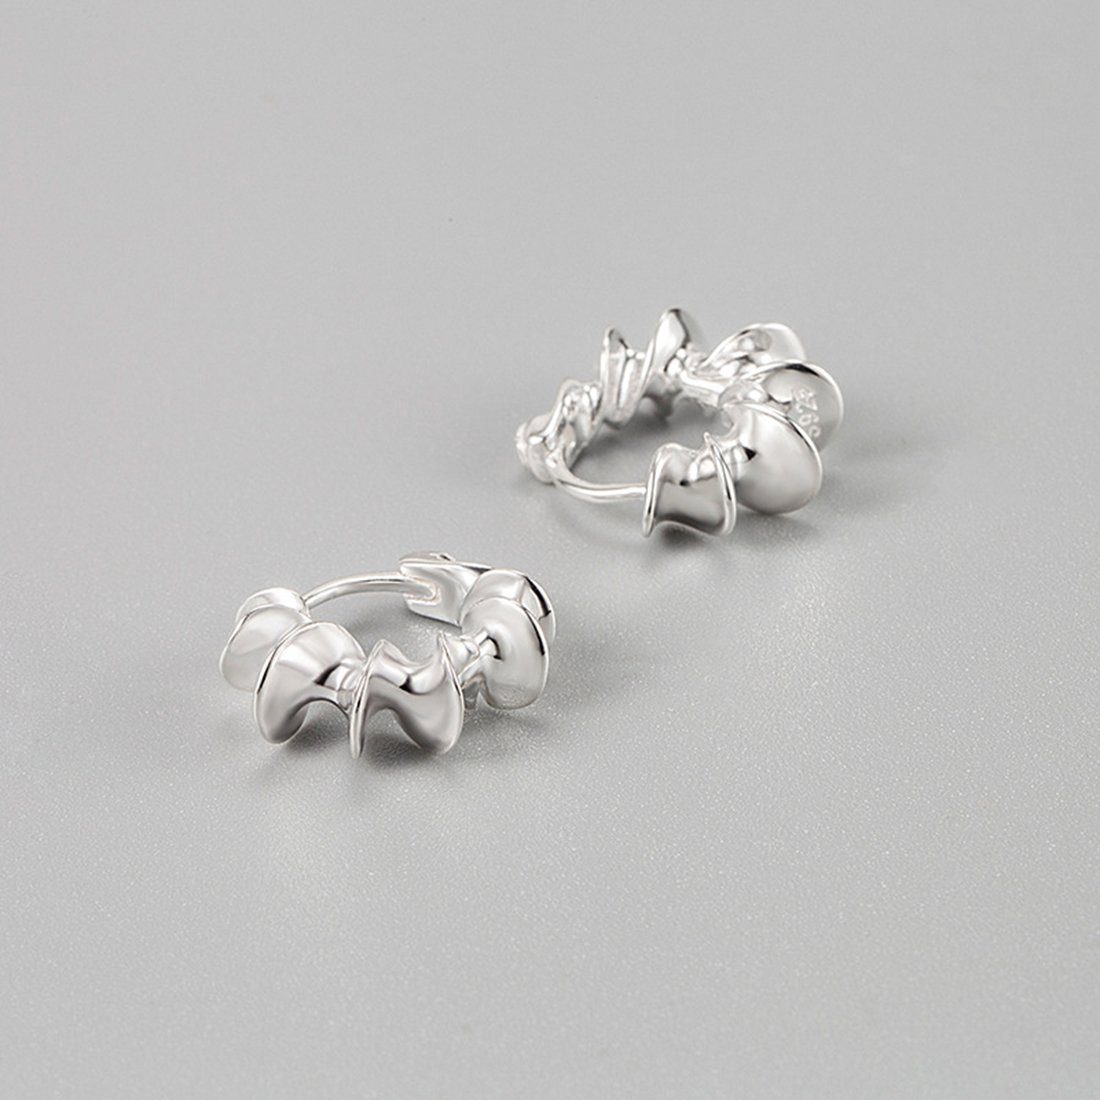 Silber OhrringeOhrringe in Haiaveng Runde Form Sterling eines mit Ohrclips 925 Paar Ohrringe Ohrhänger Spiralfadens,